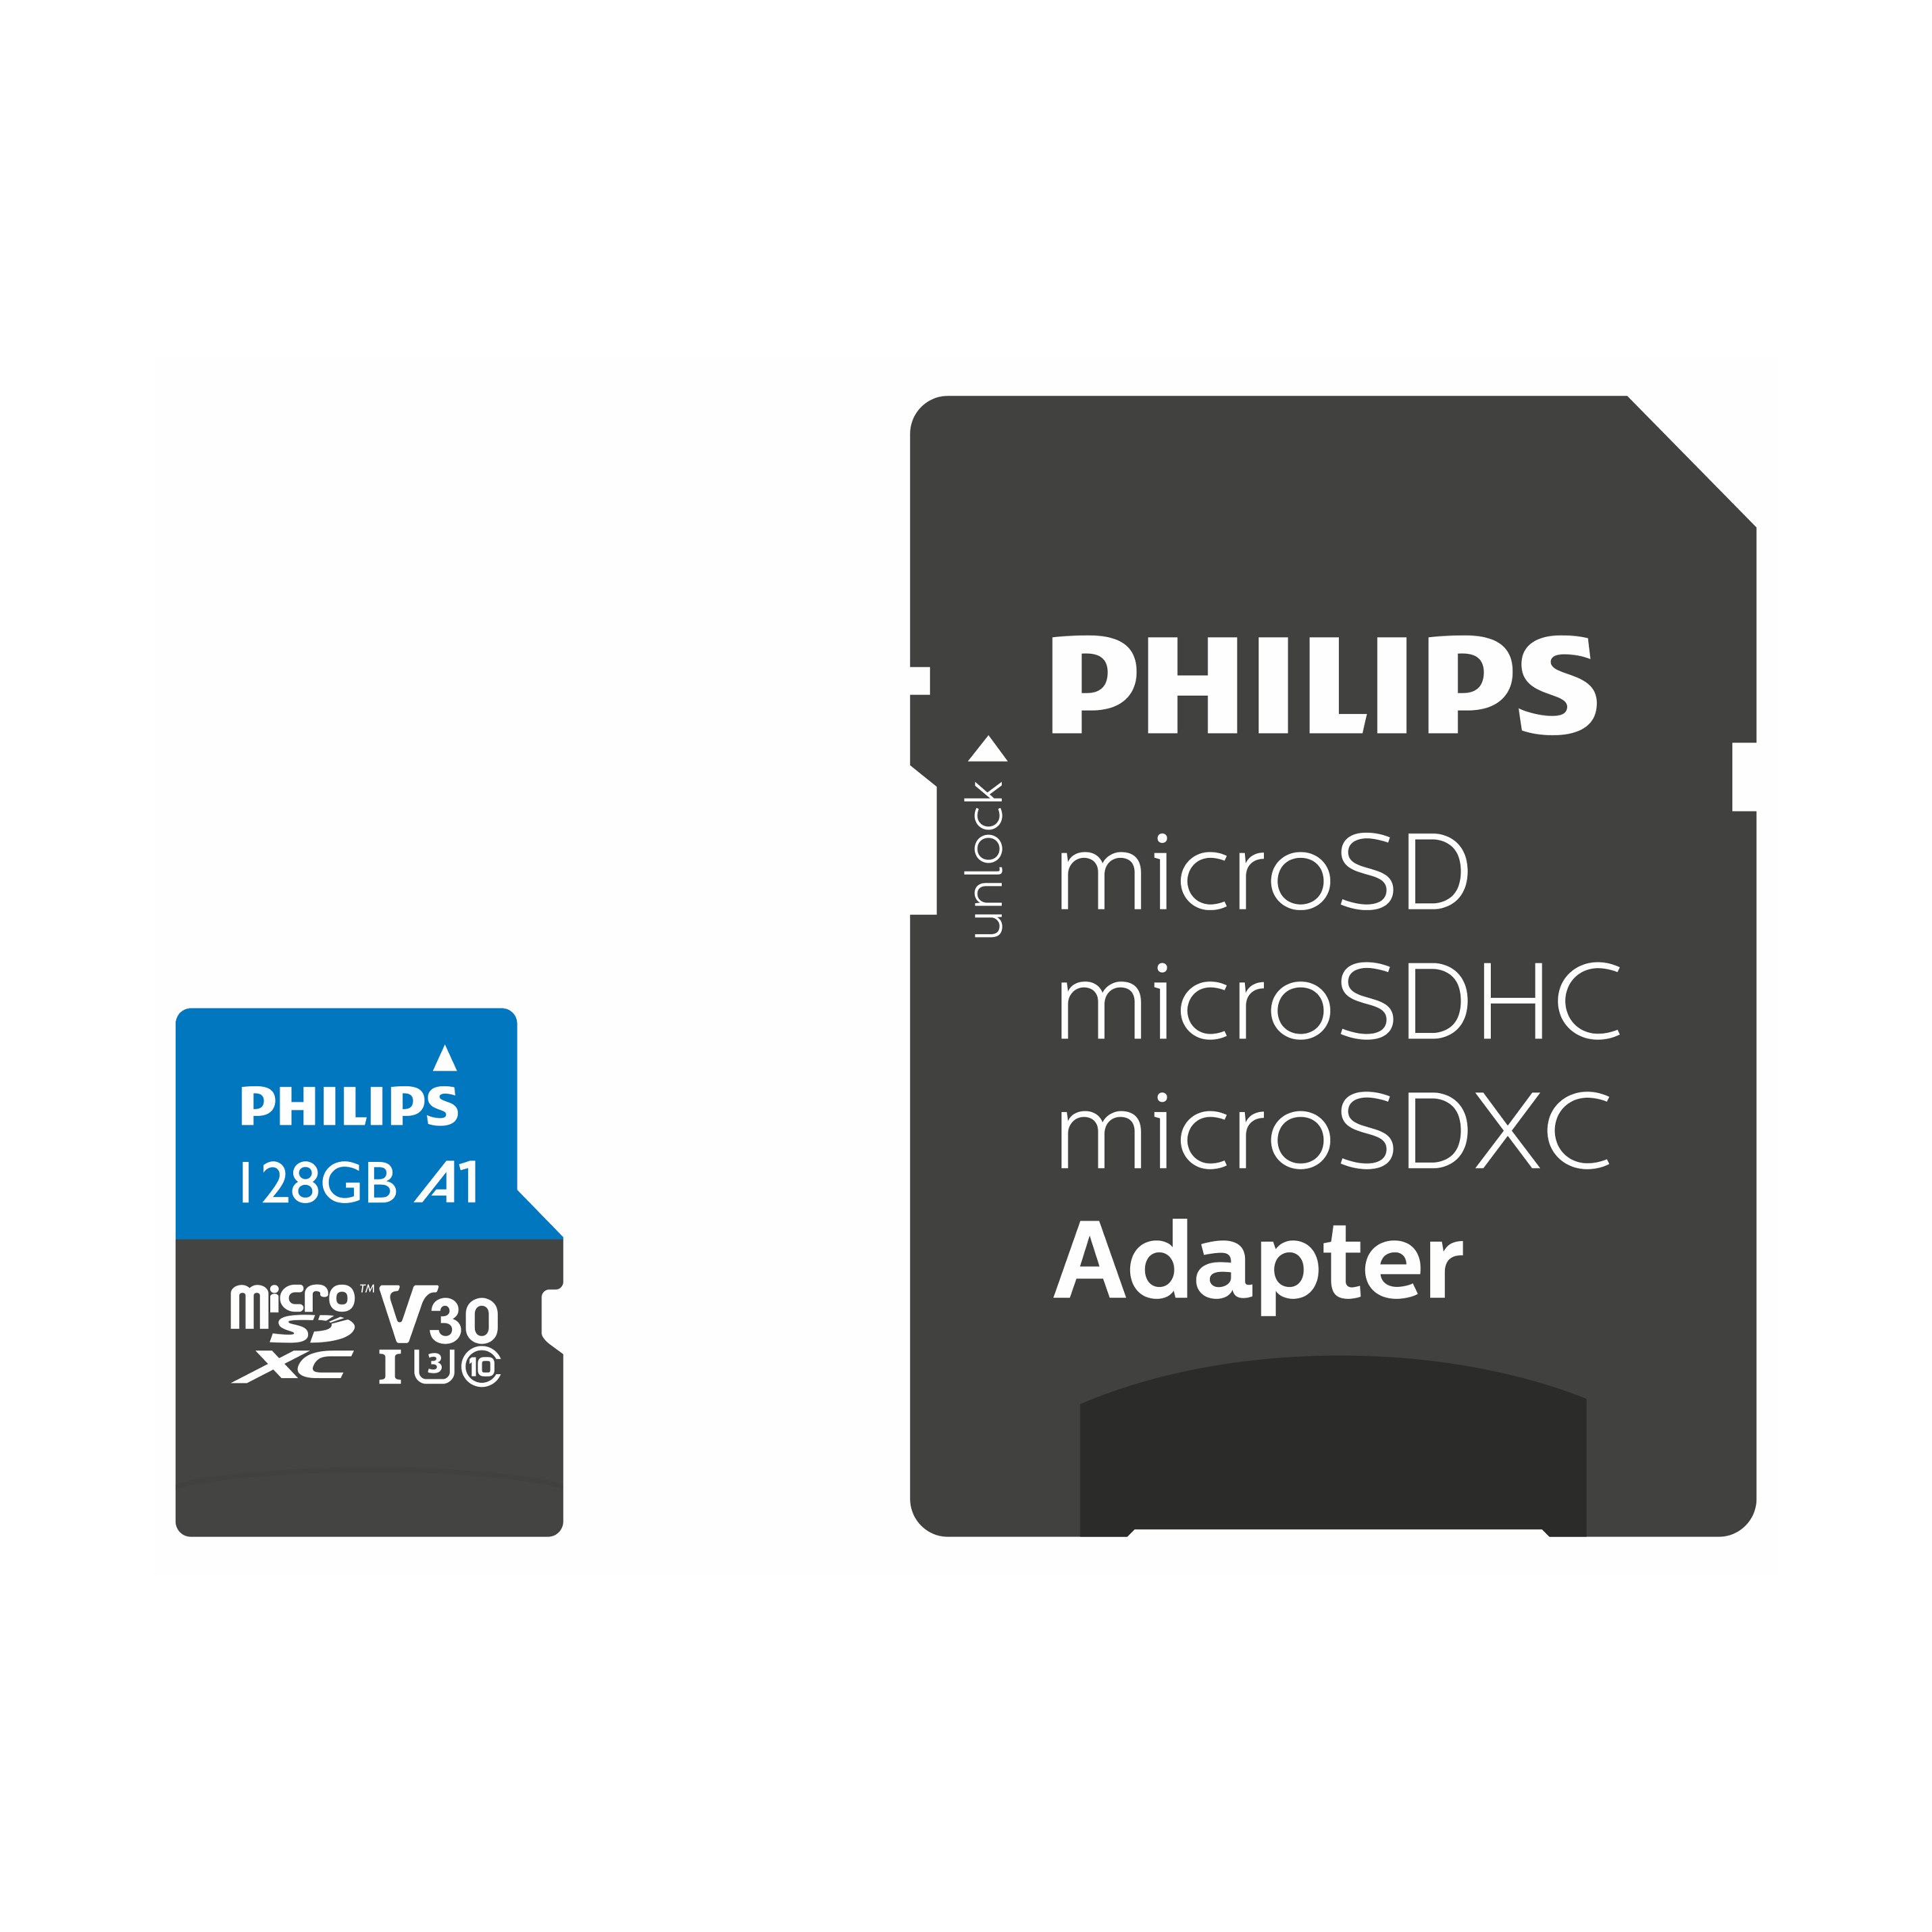 128 U3/ Speicherkarte, Mbit/s Adapter, UHS-I 4K/ Class Micro-SDXC 10/ 128, PHILIPS Micro-SDXC 100 GB,